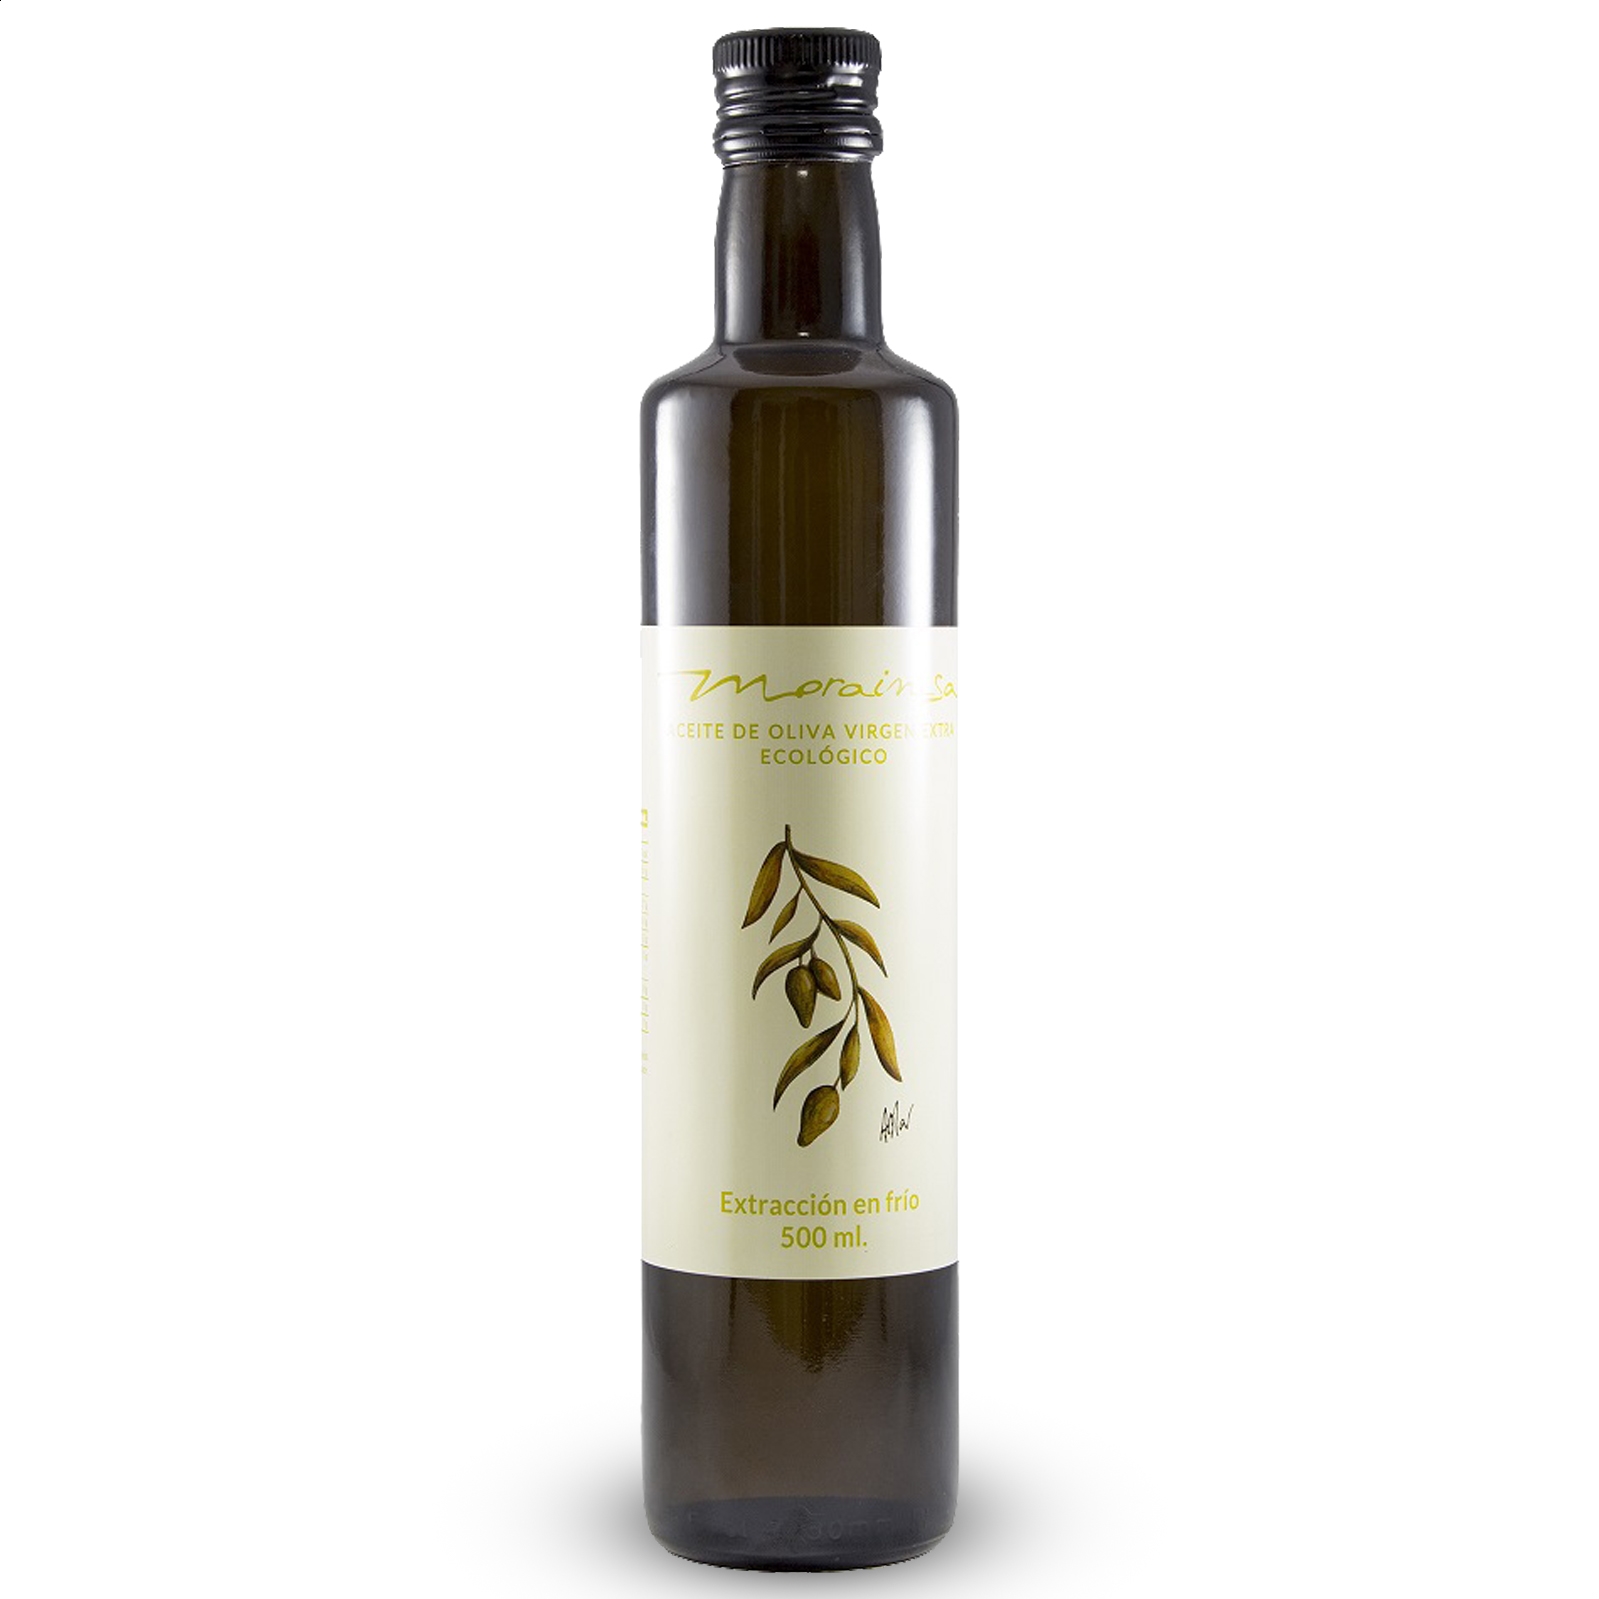 Morainsa - Estuche aceite de oliva virgen extra ecológico 500ml, 3uds